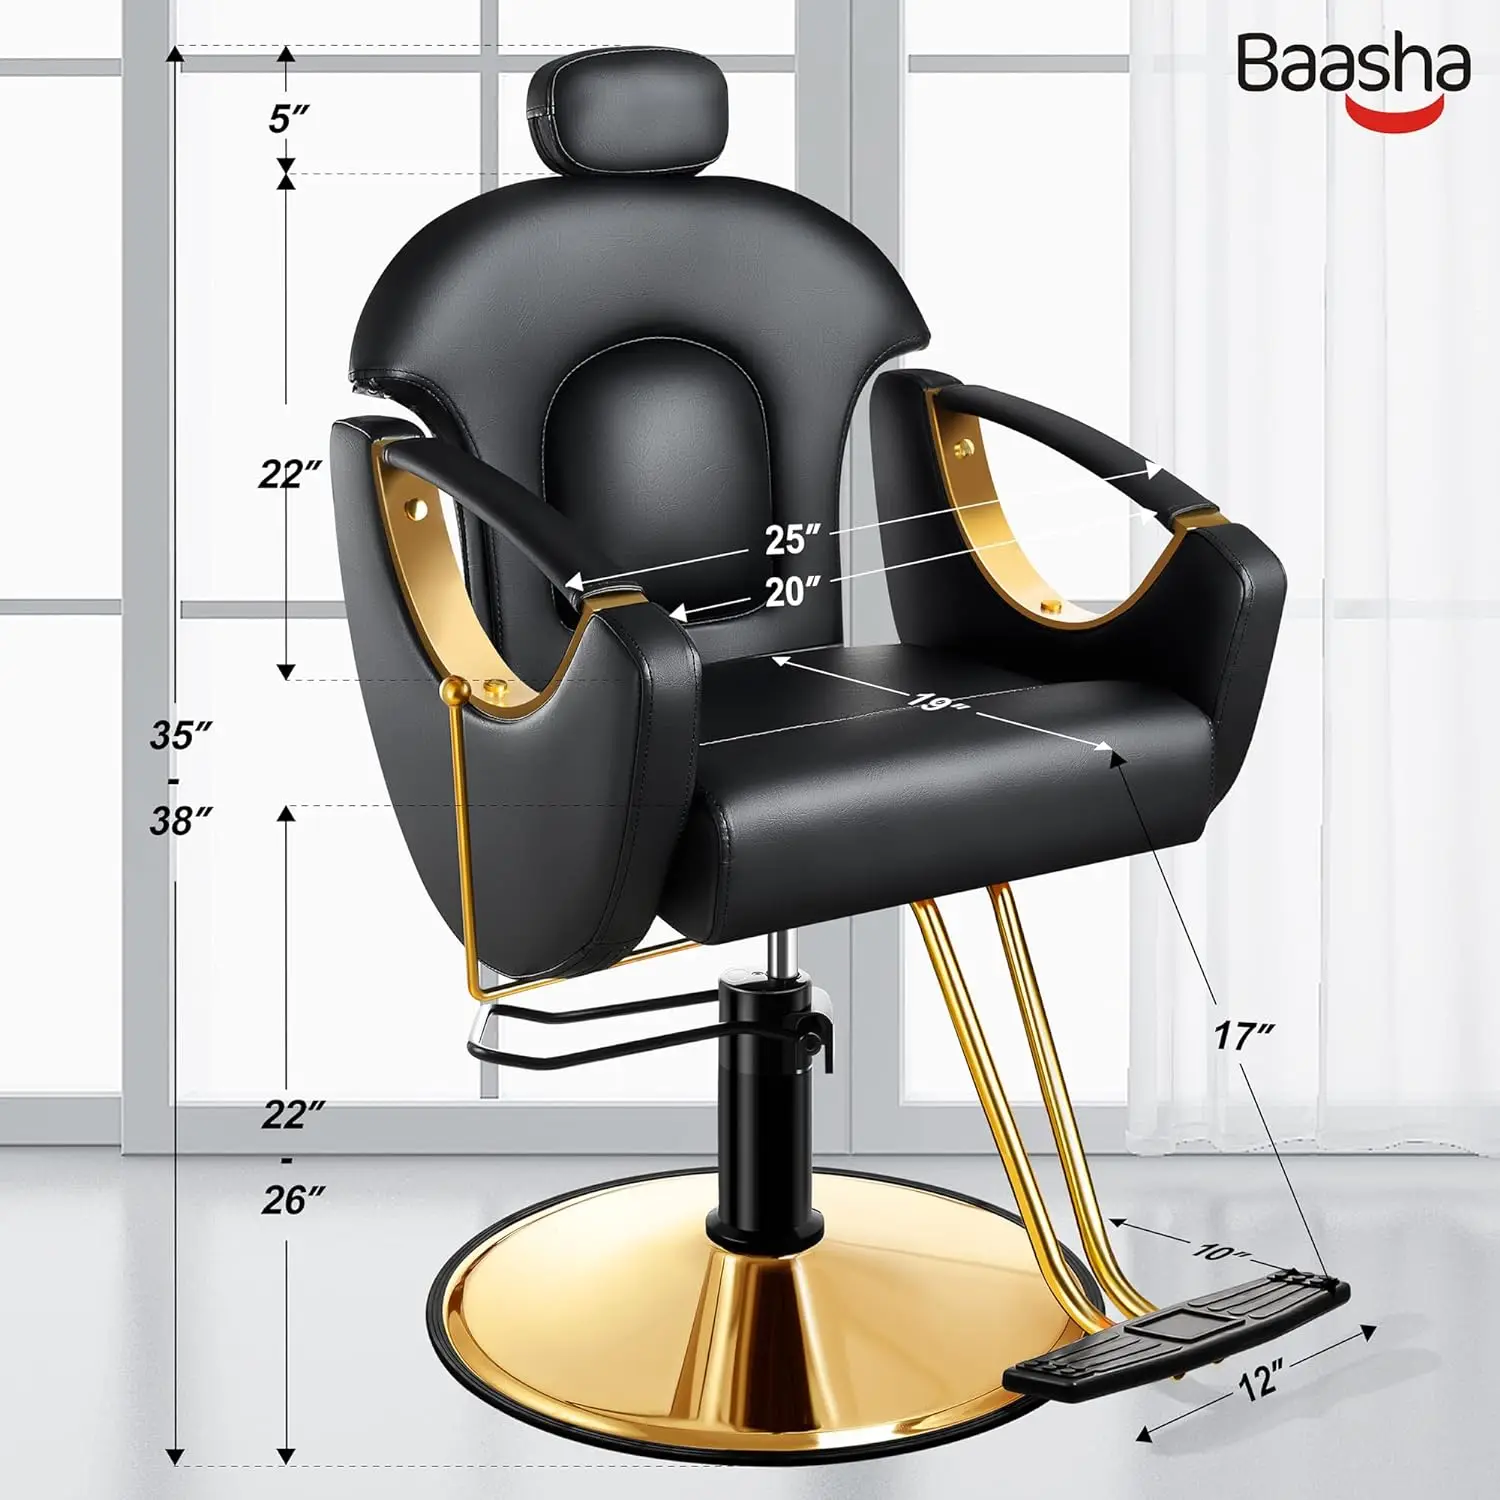 Baasha Barber Chair Reclining Hair Salon Chair, All Purpose Gold Salon Chair for Hair Stylist, 360 Degrees Rolling Swivel Styl